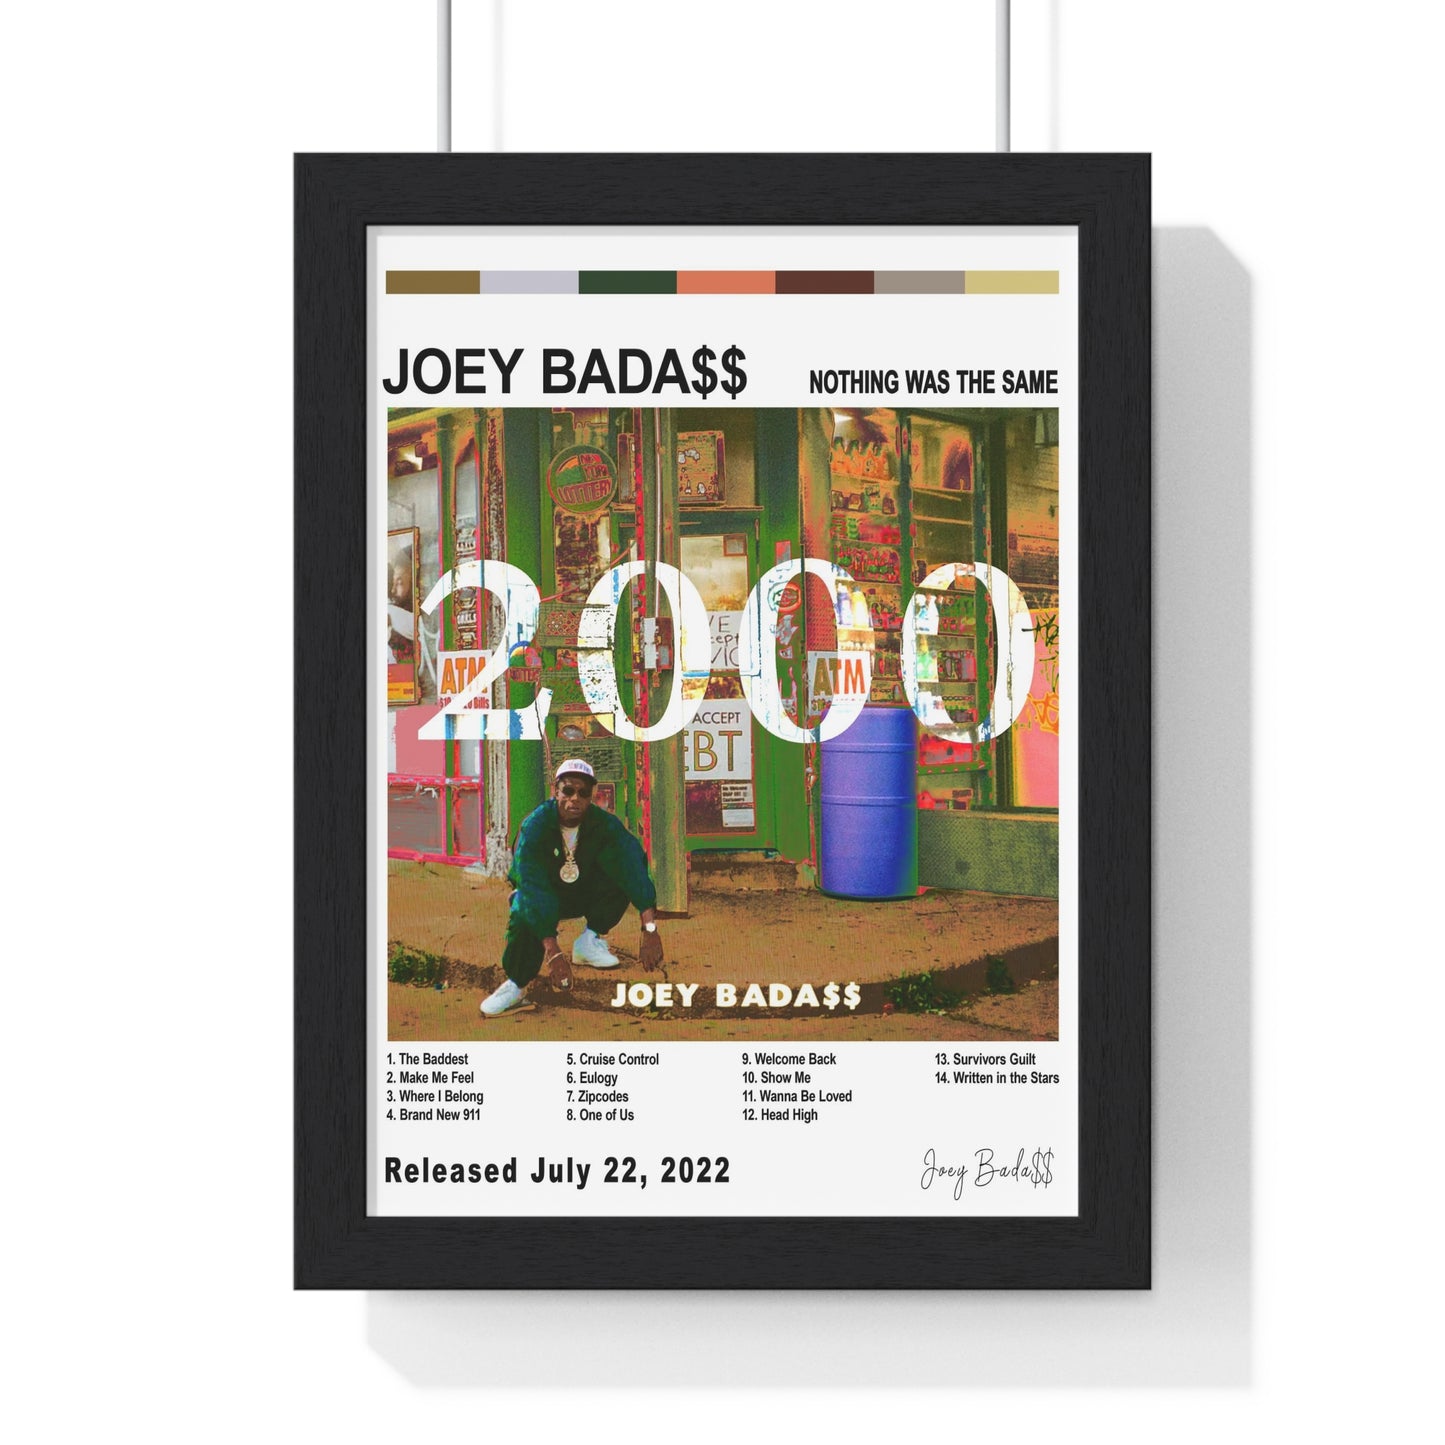 Joey Bada$$ - 2000 Album Cover Poster